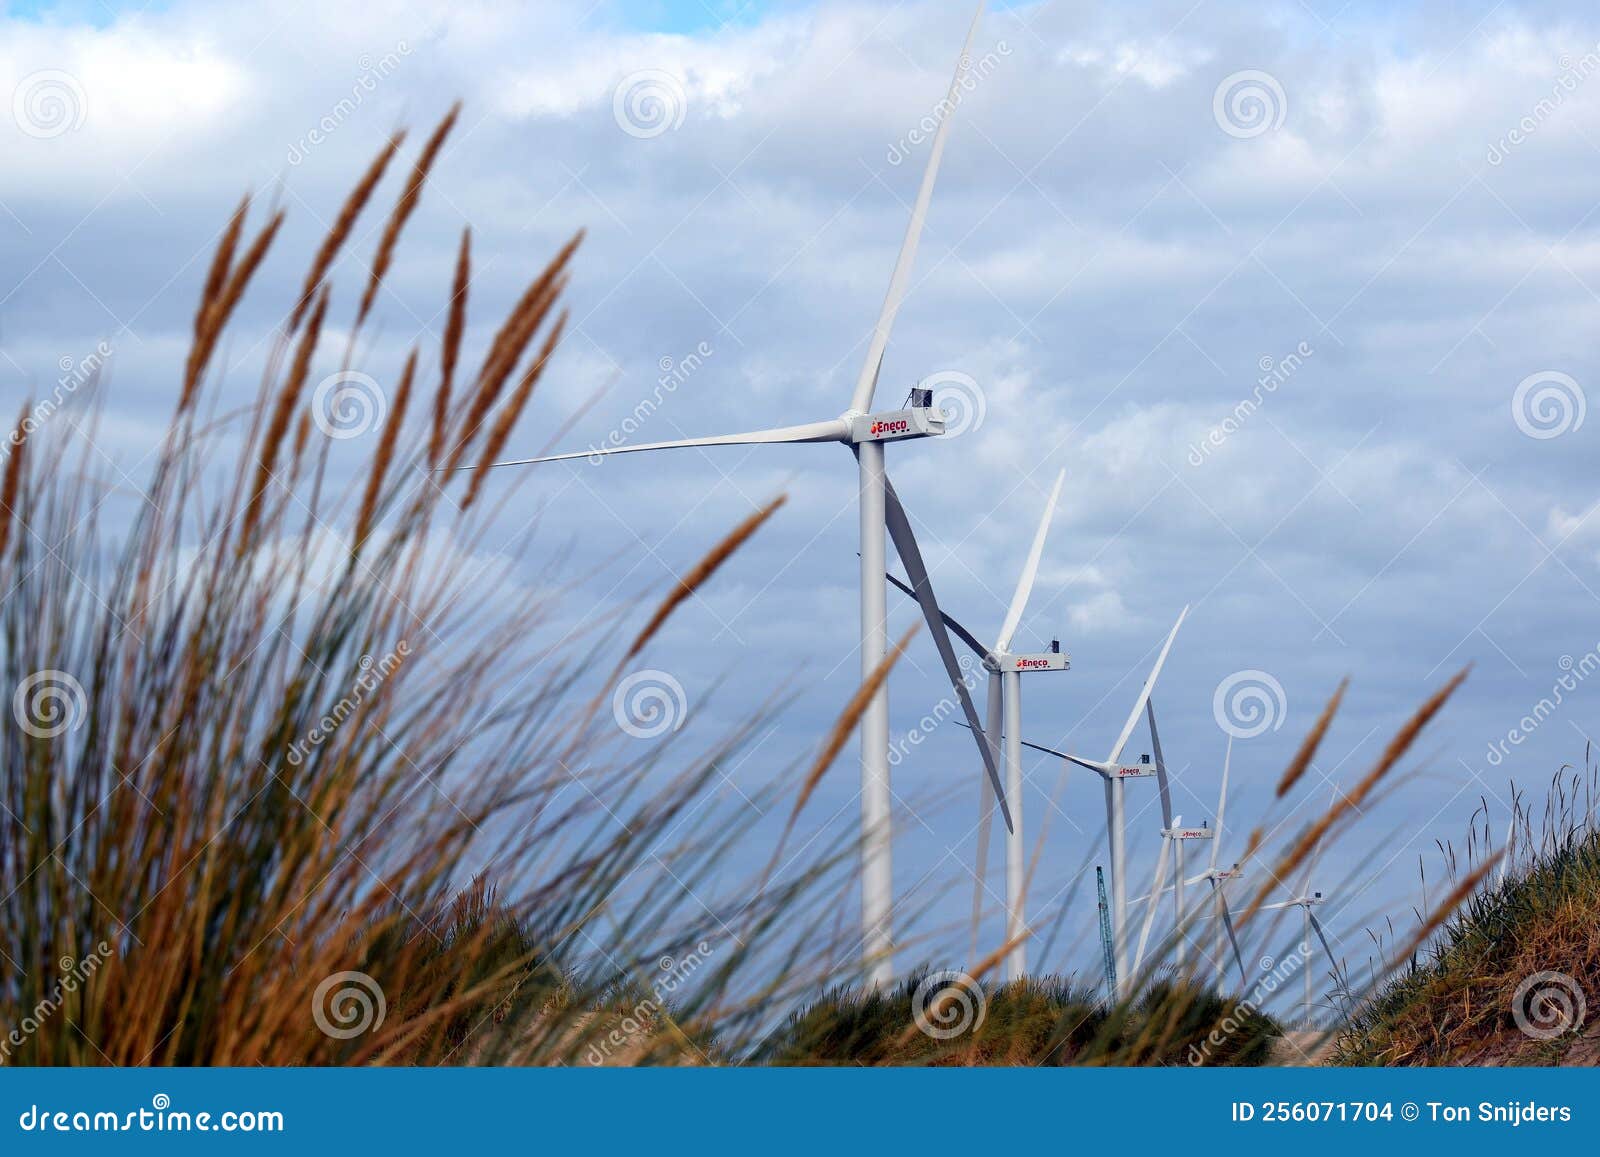 windmills under construction on the beach of the maasvlakte